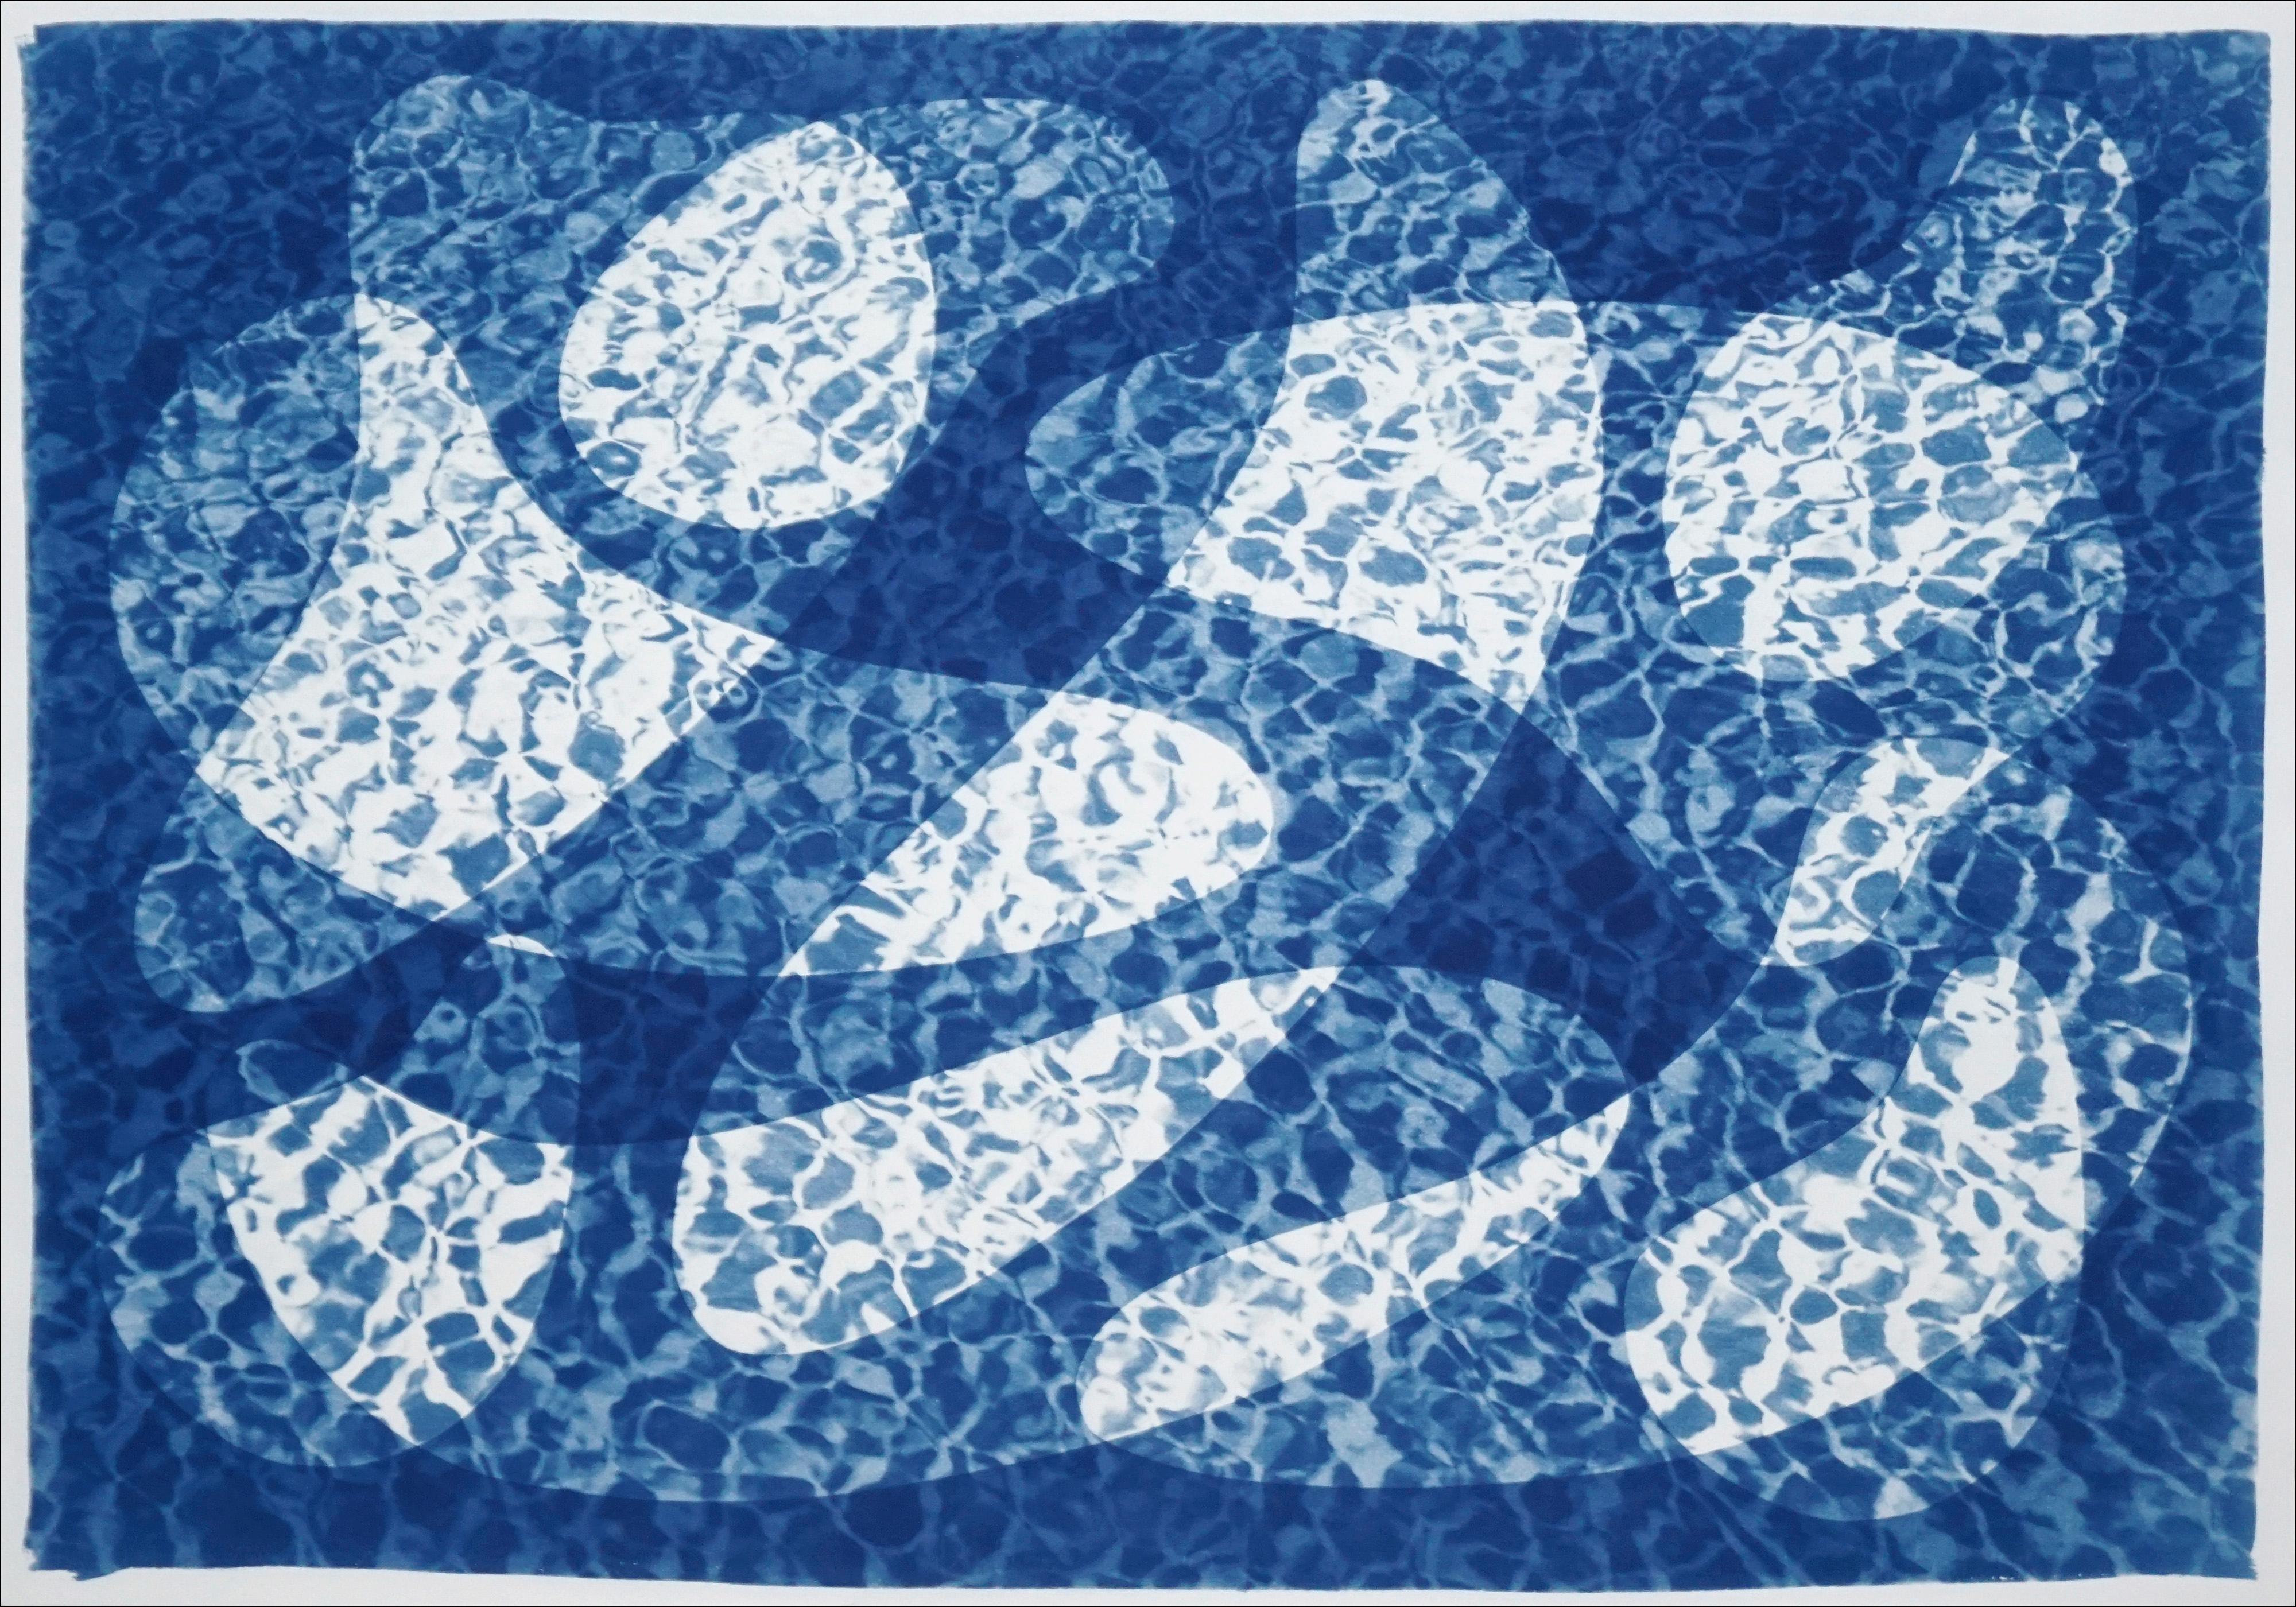 Kind of Cyan Abstract Print - Fish Swimming Below Water, Fresh Blue Tones Cyanotype Print, Pool Art on Paper